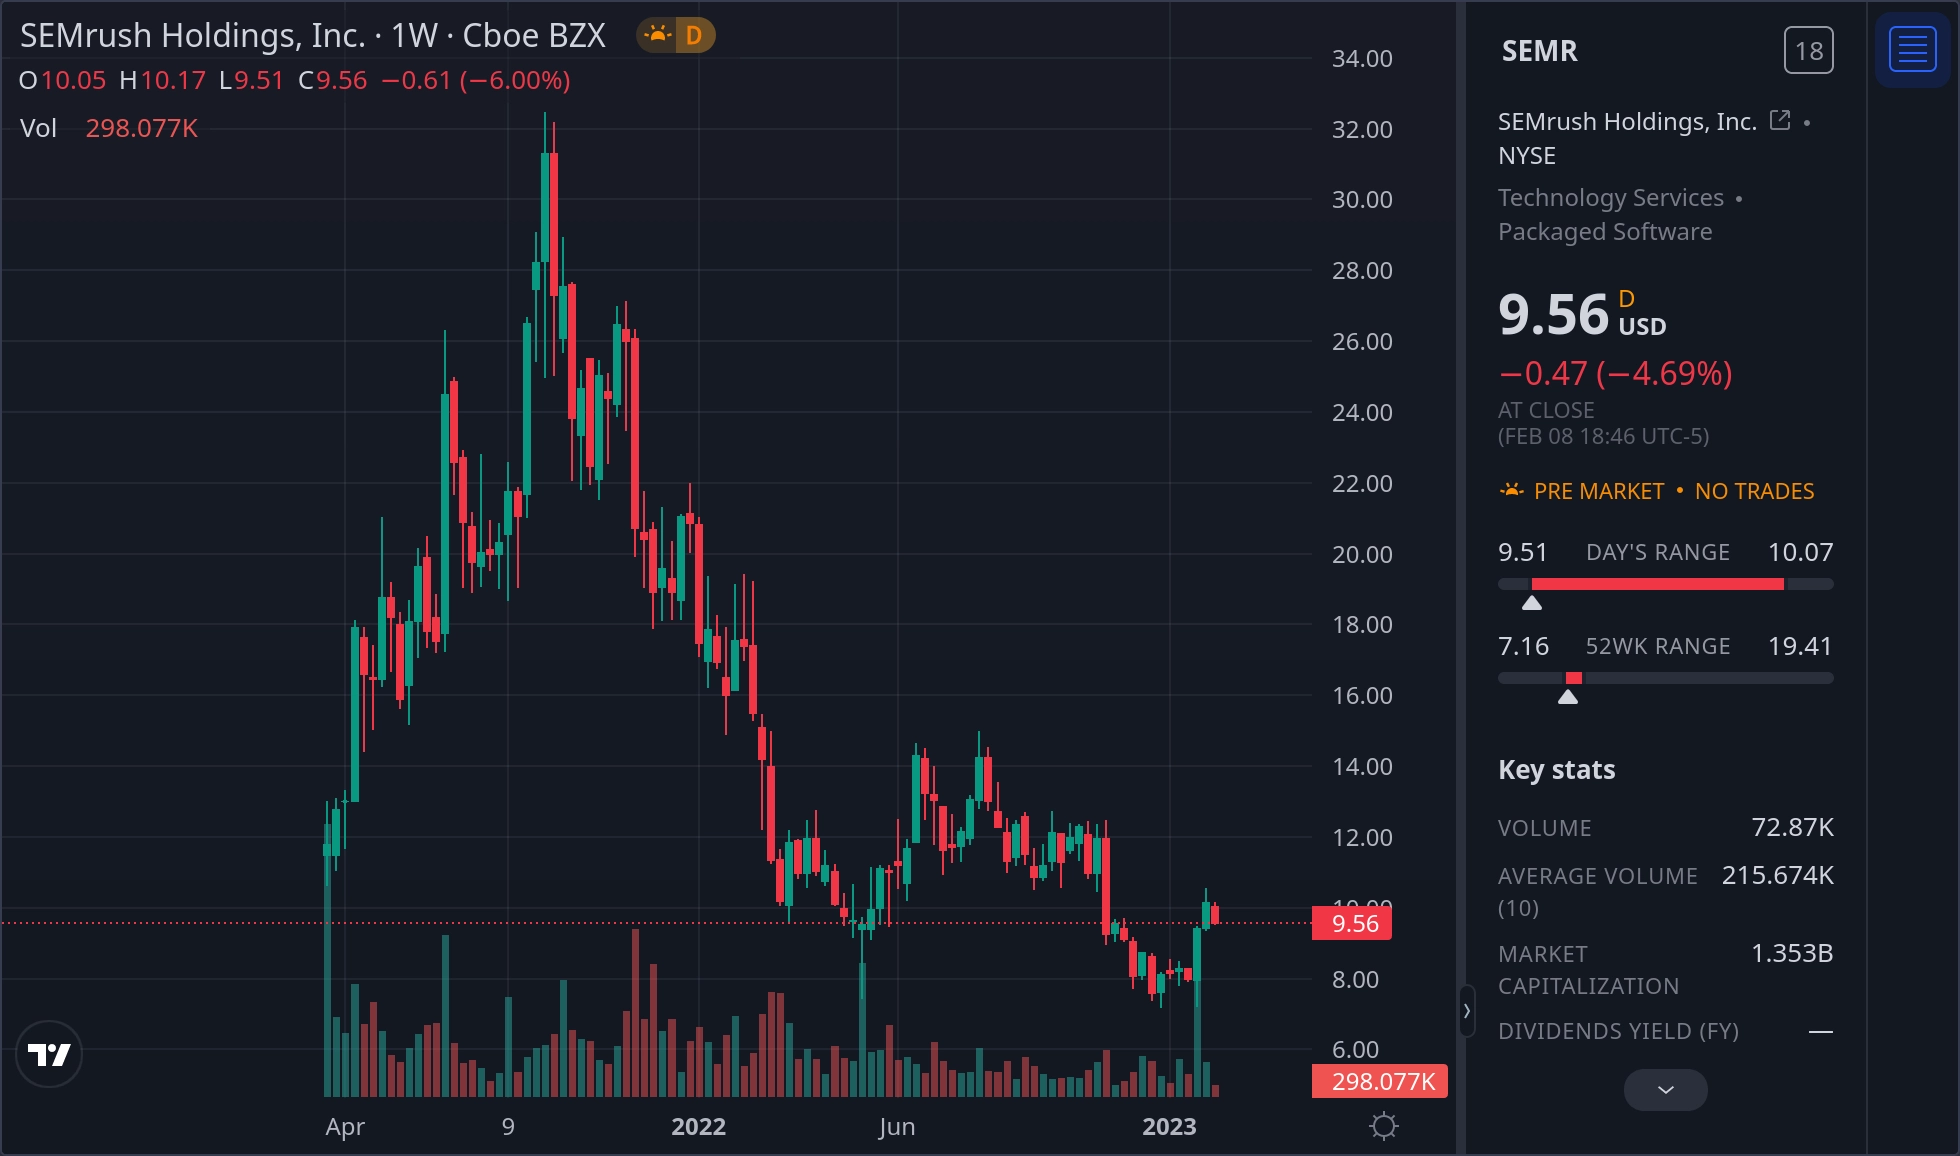 SEMR stock chart by TradingView